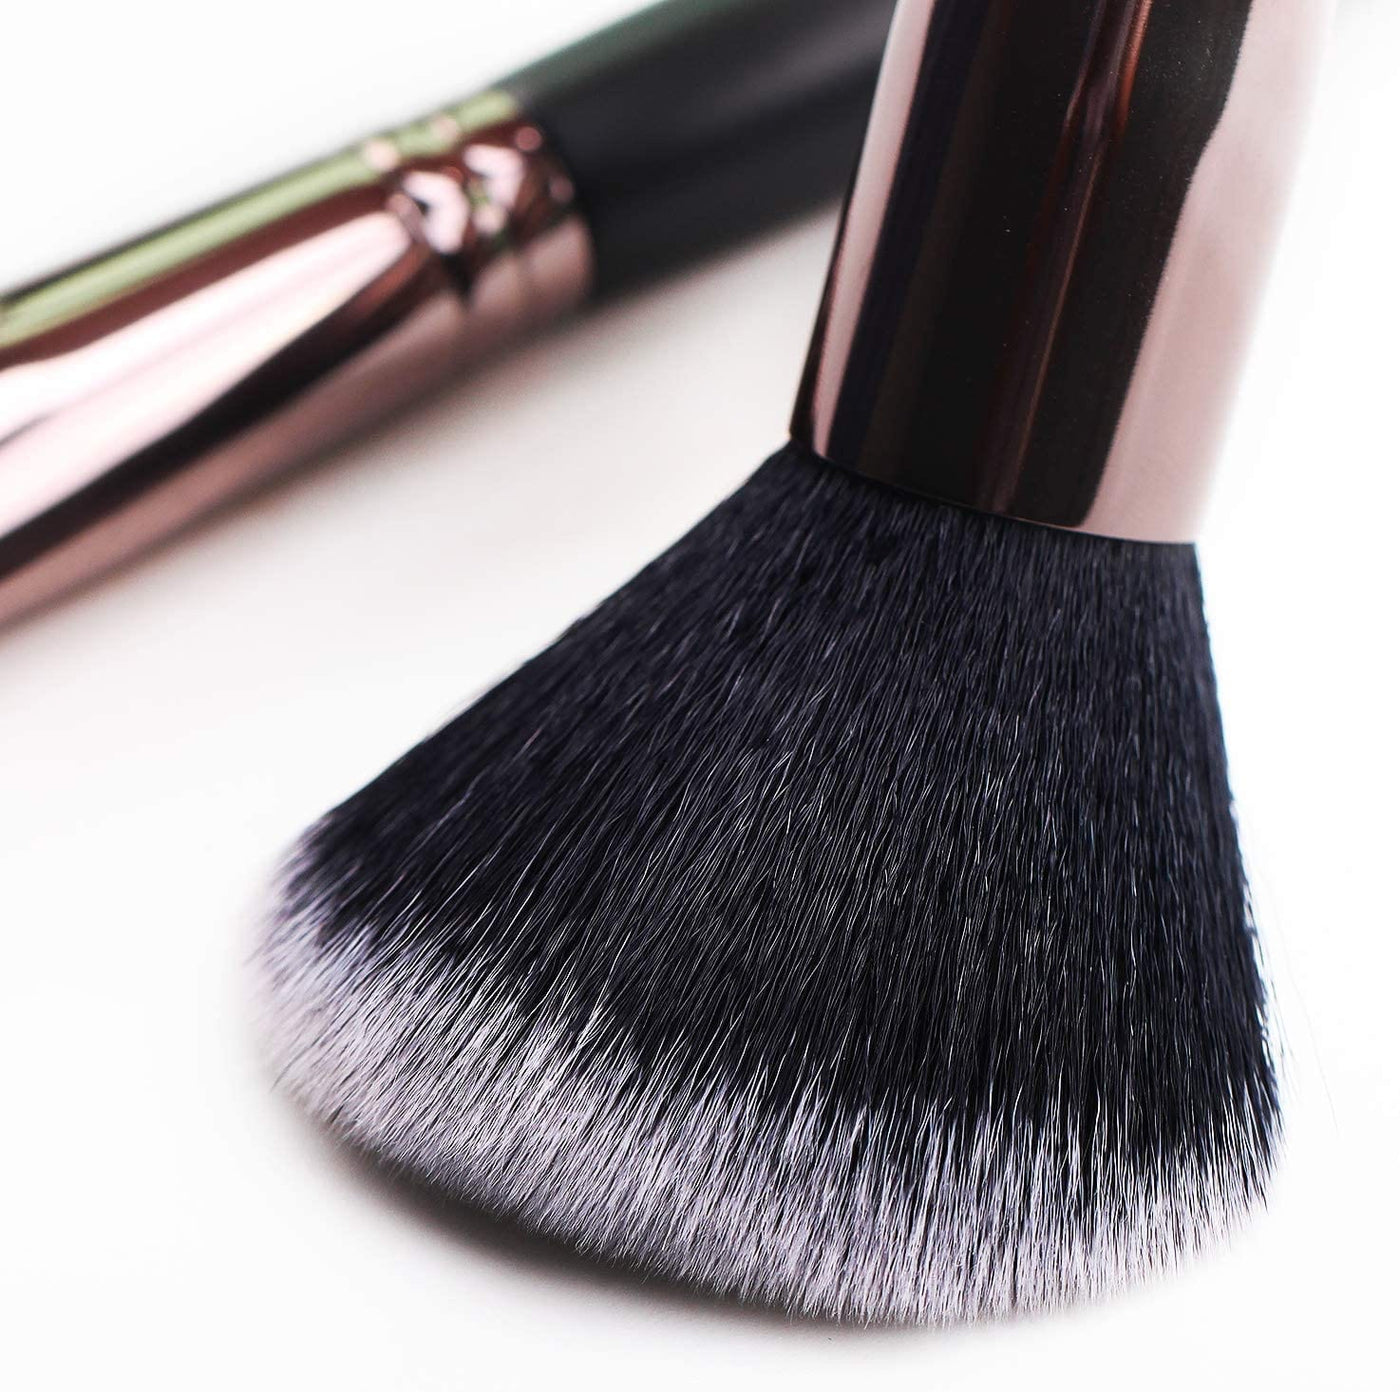 Dubkart Makeup brushes 24 PCS Professional Cosmetic Facial Makeup Brush Kit (Wood Black)